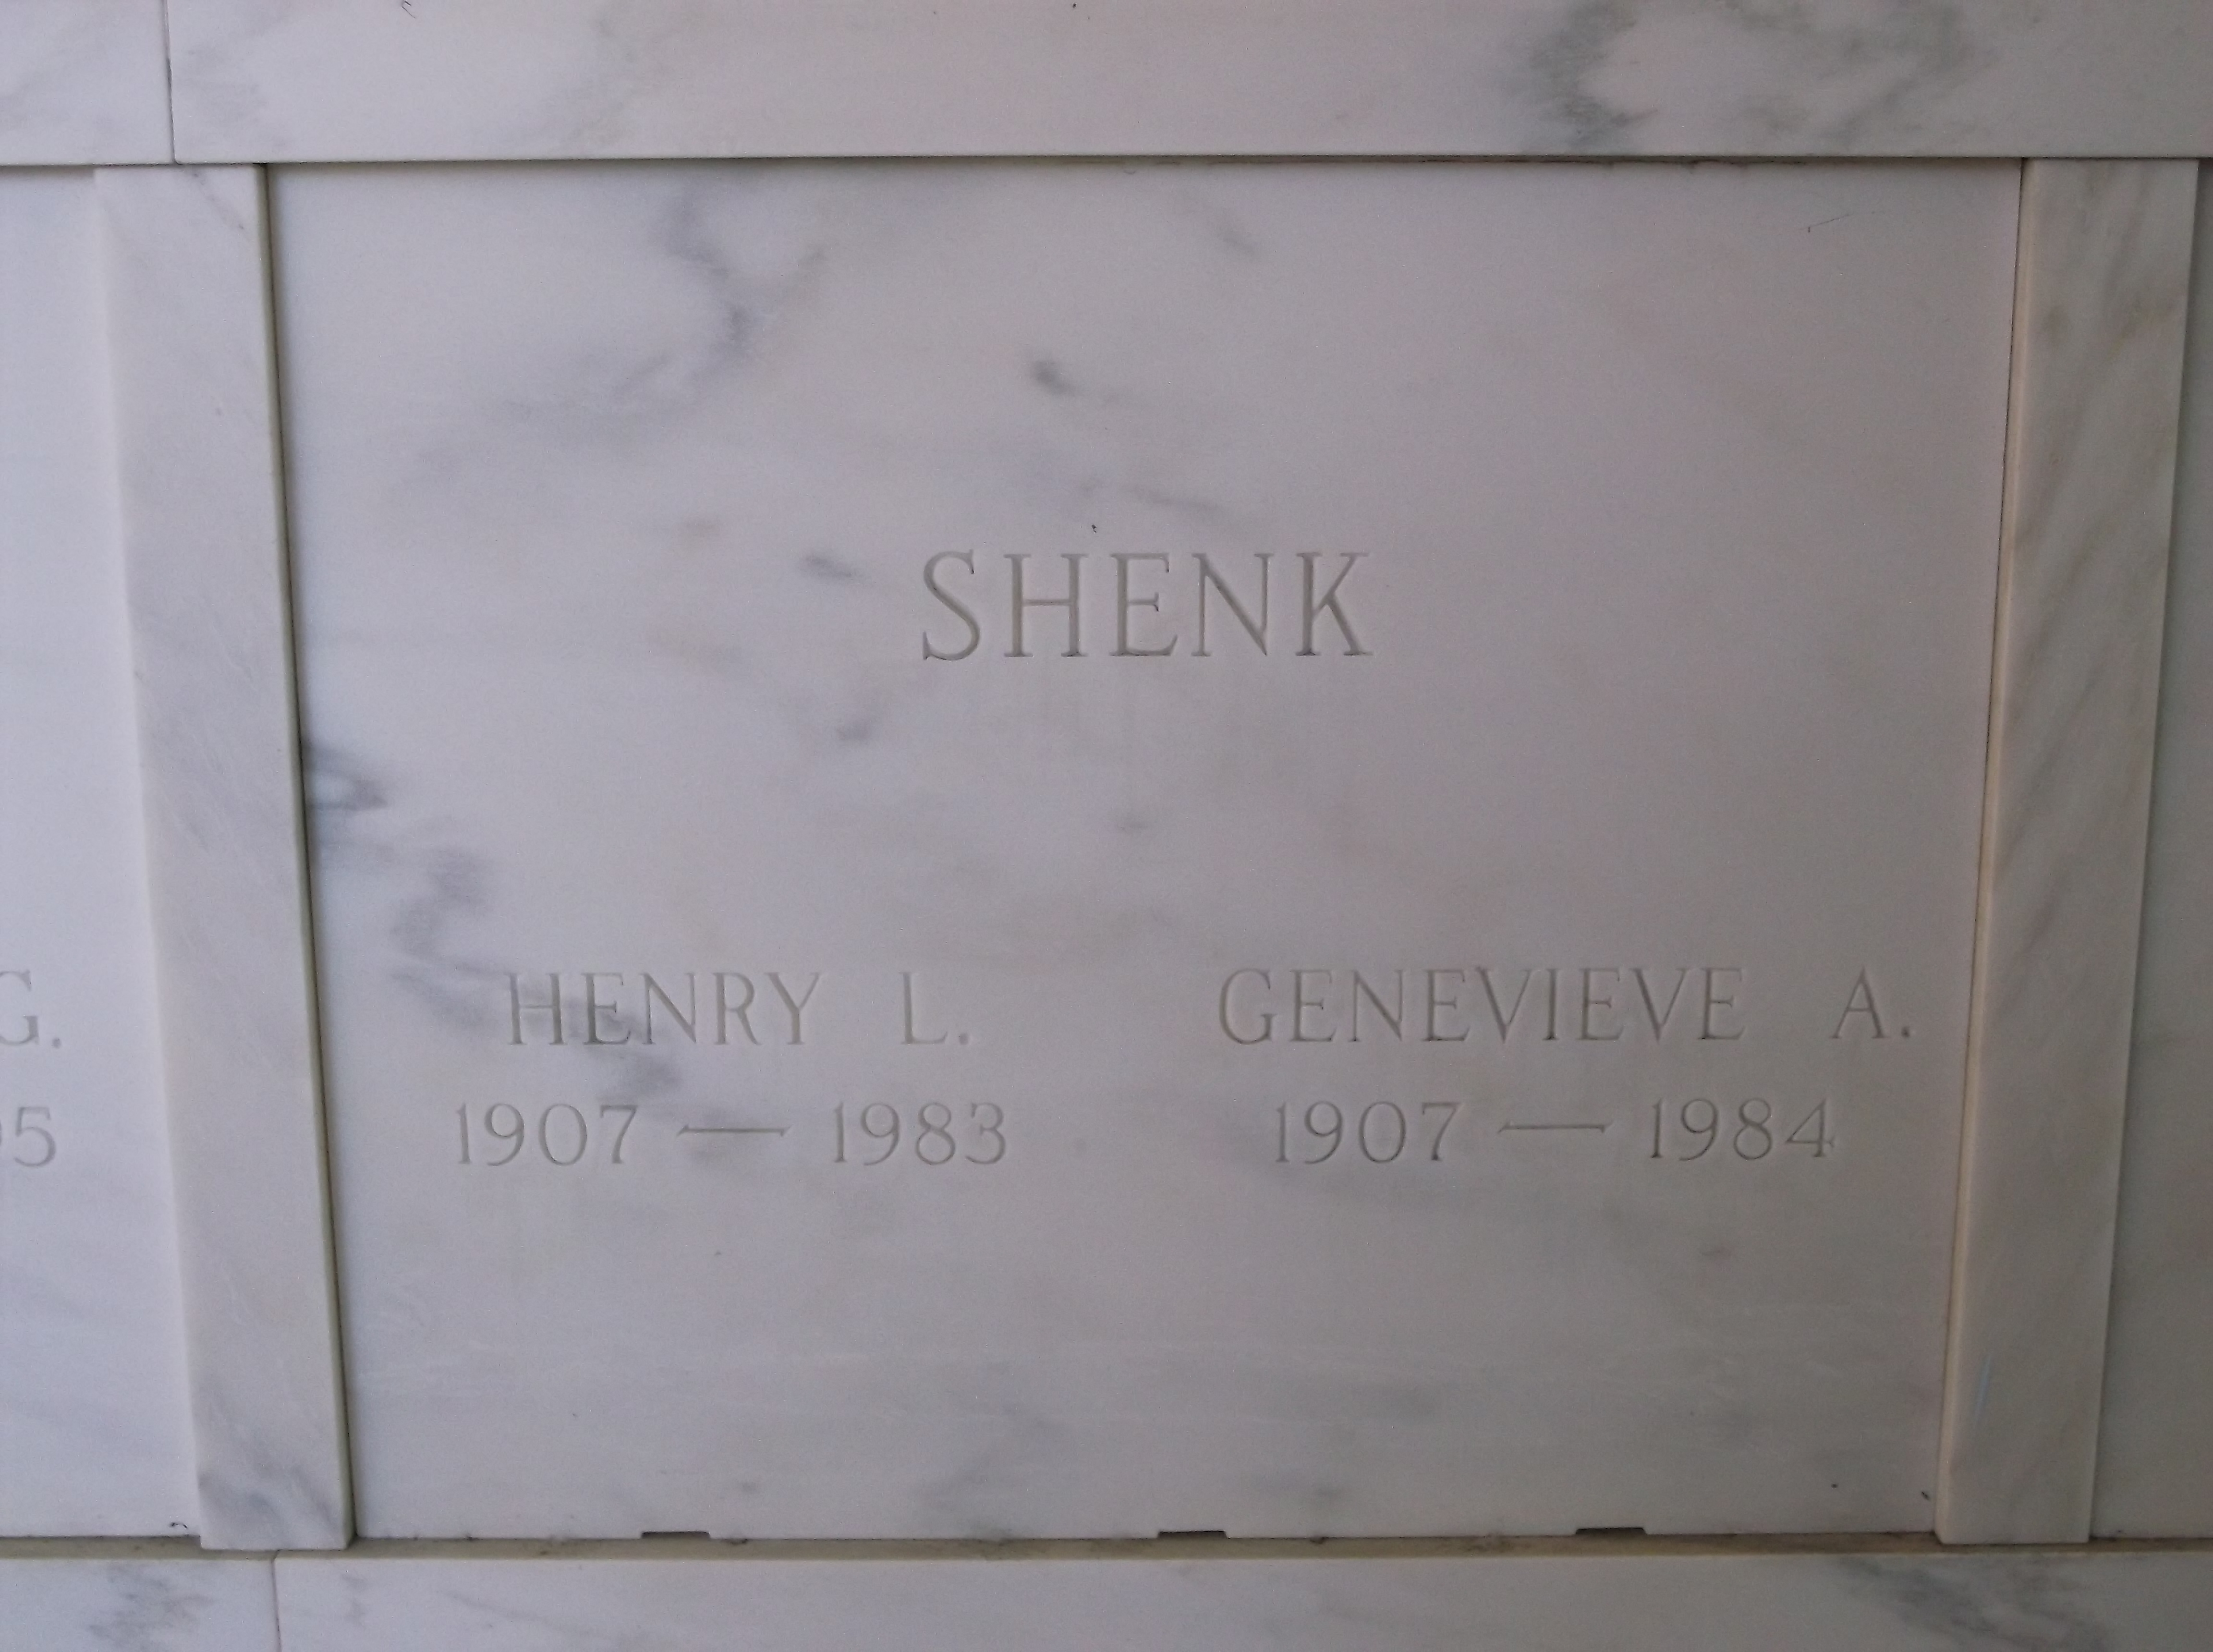 Henry L Shenk